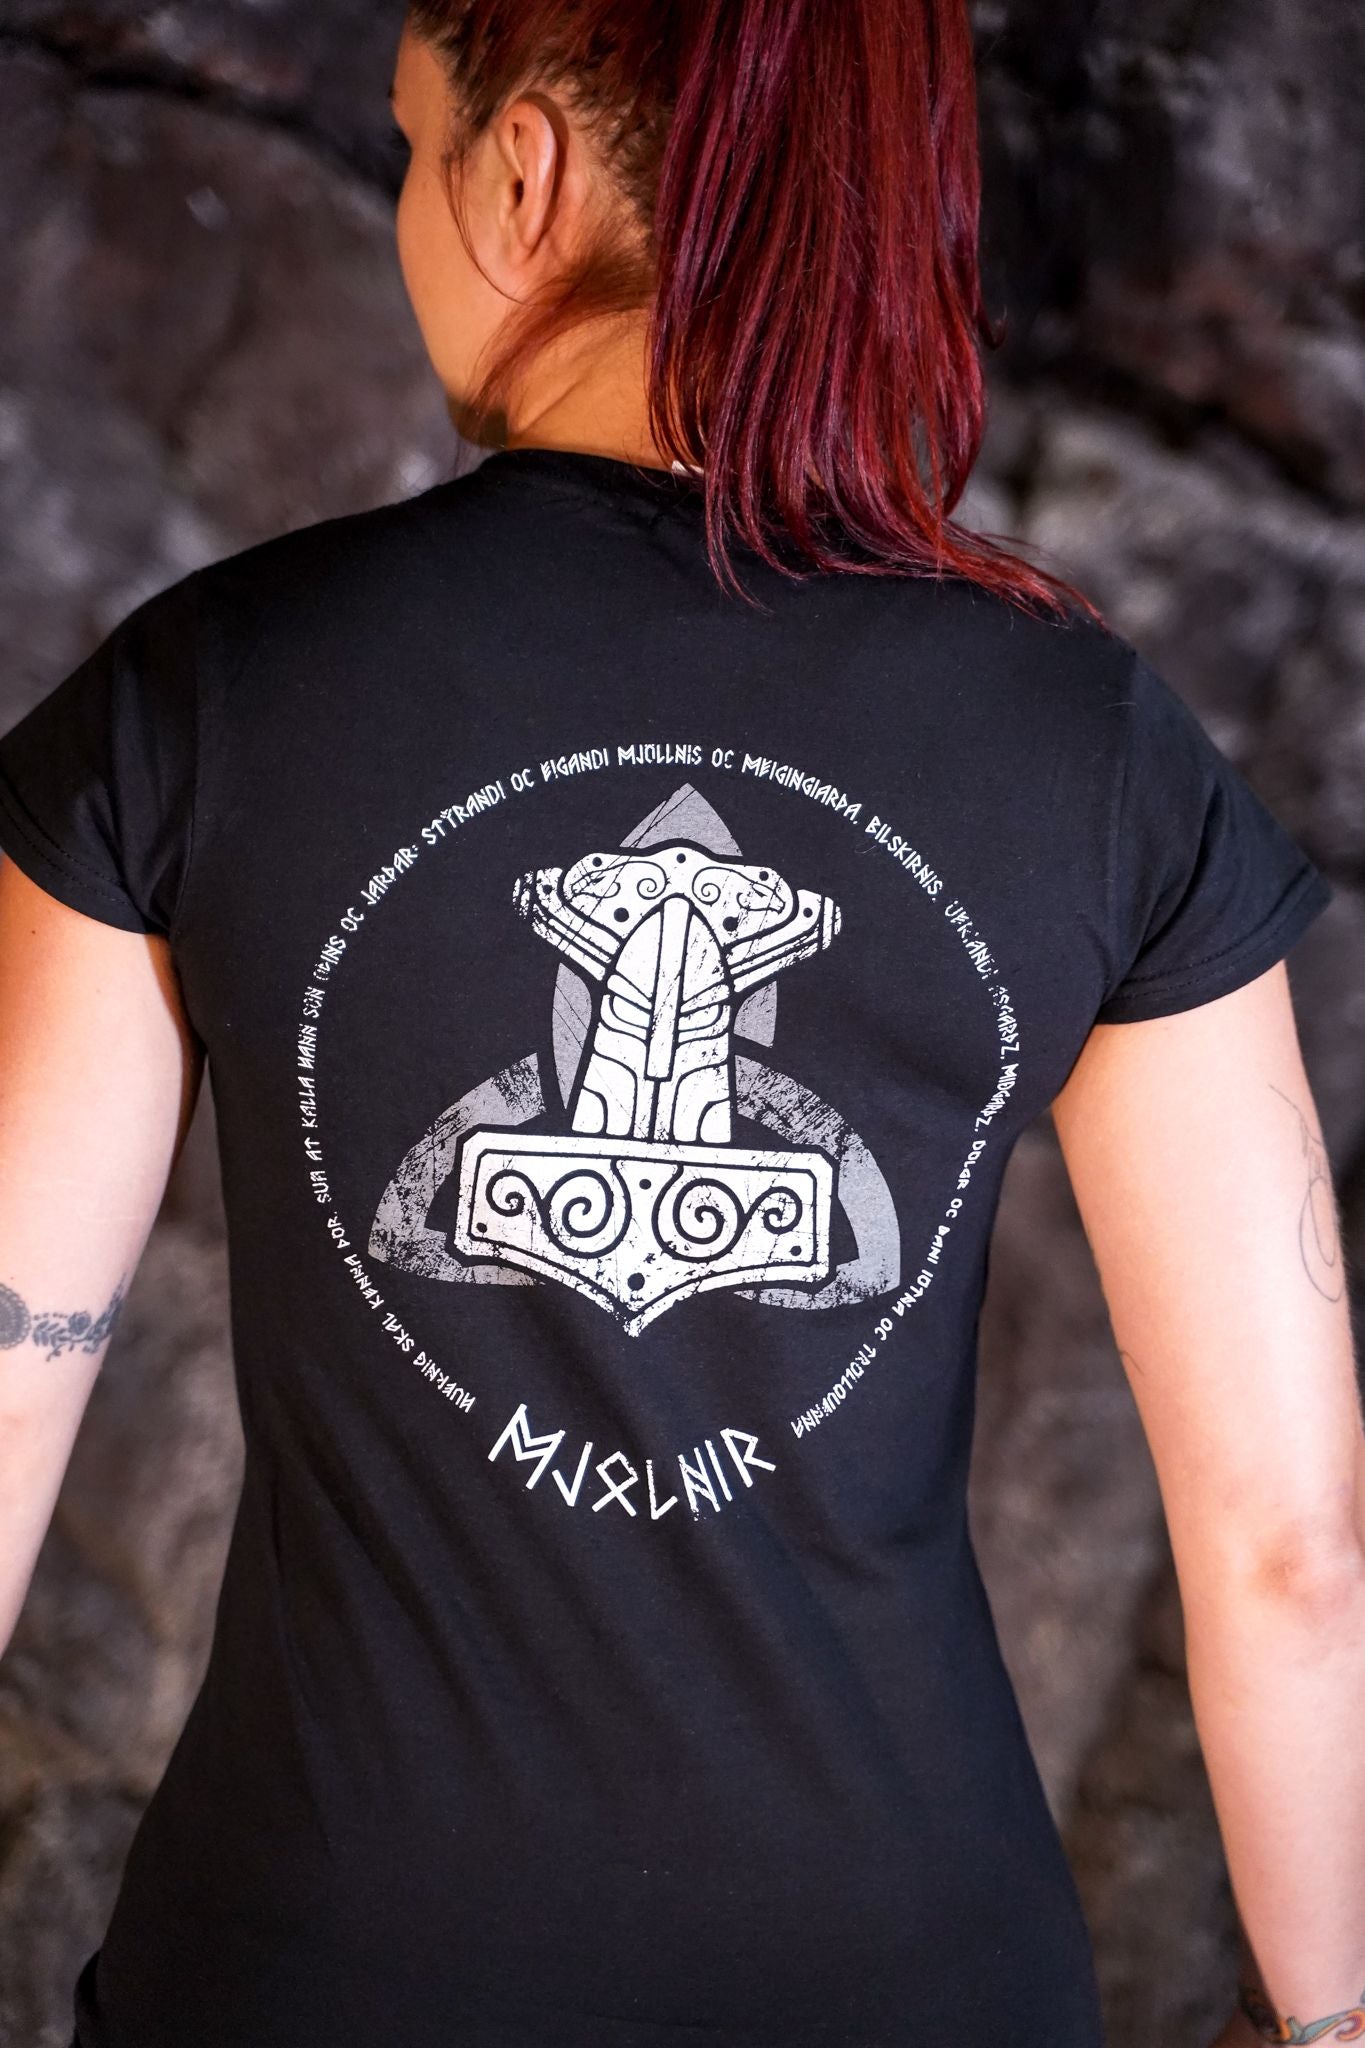 Mjolnir T-shirt – Snorra Edda Ladies